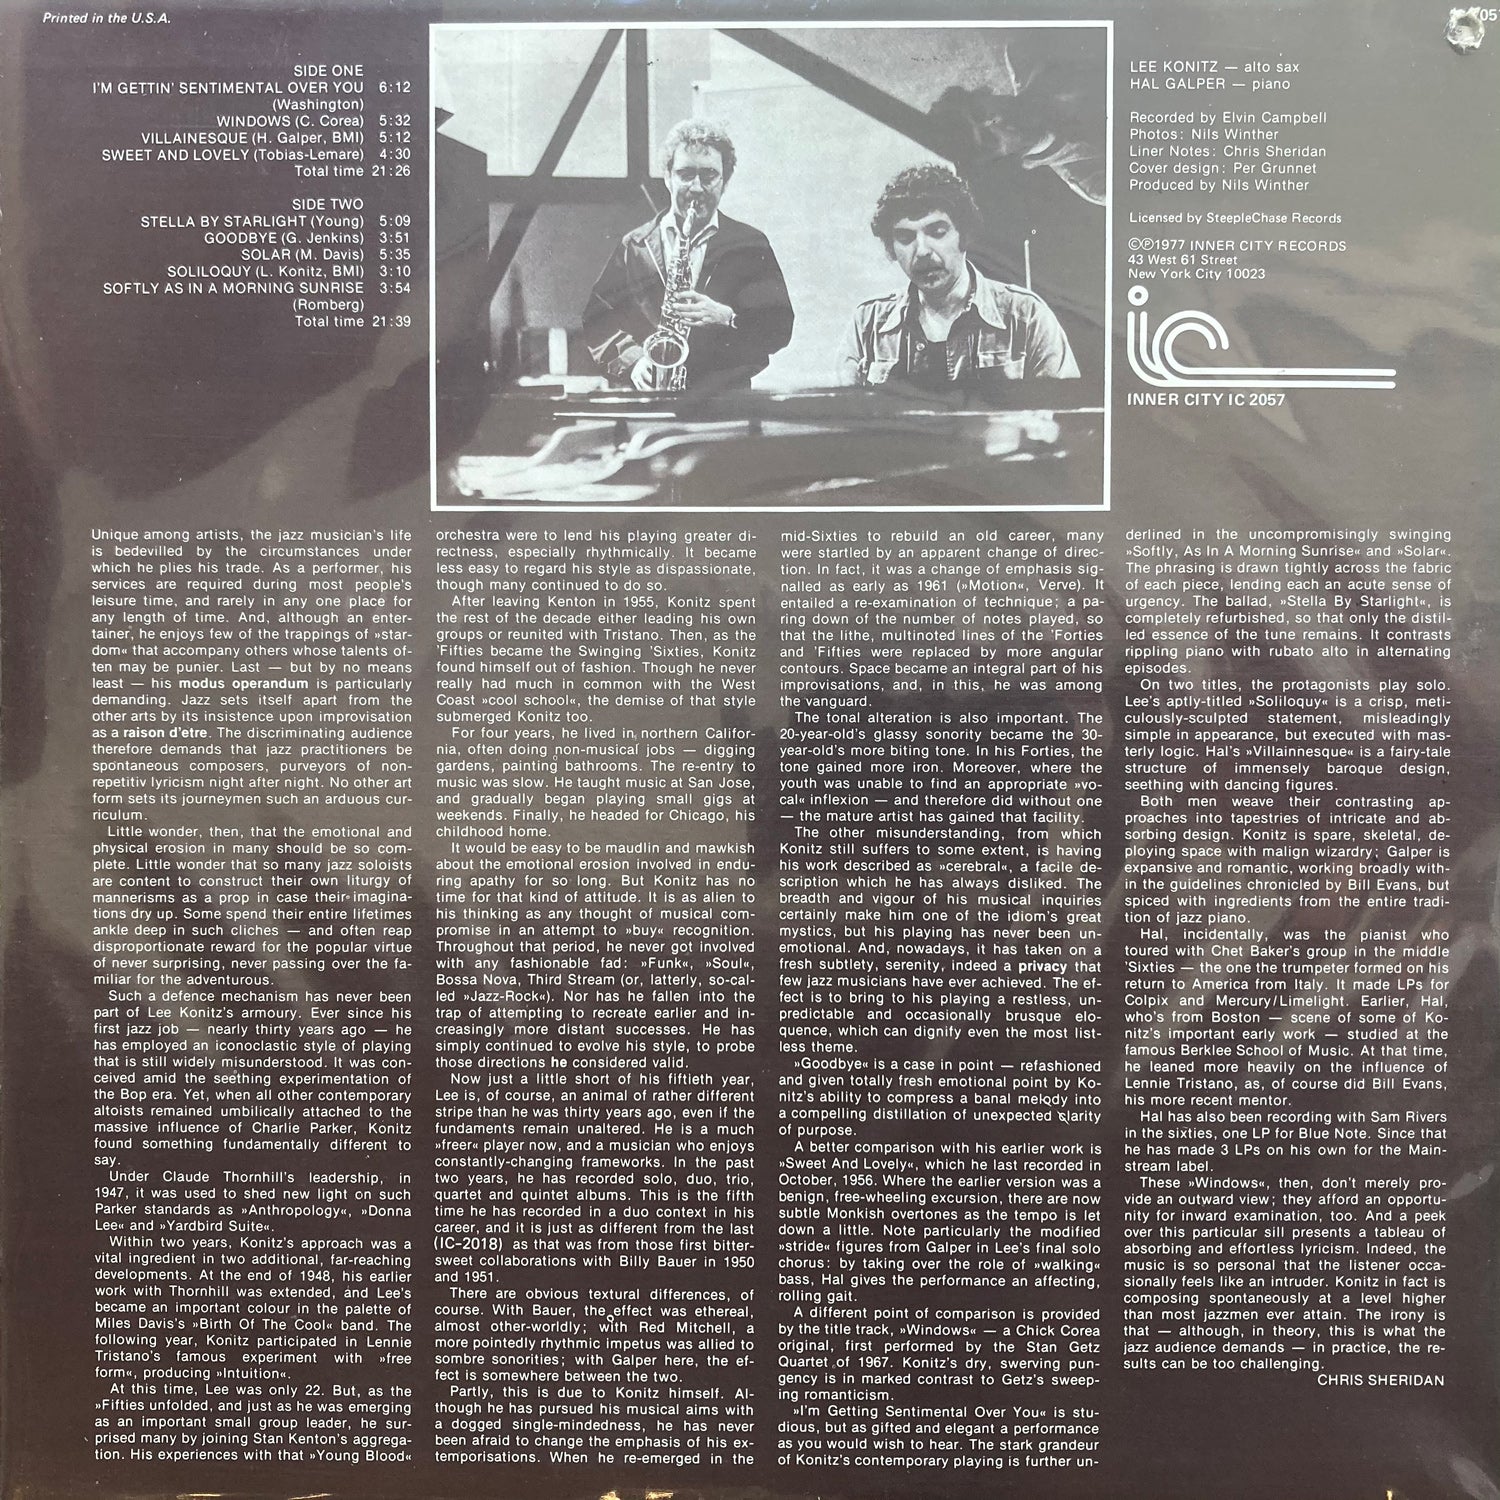 Lee Konitz & Hal Galper - Windows